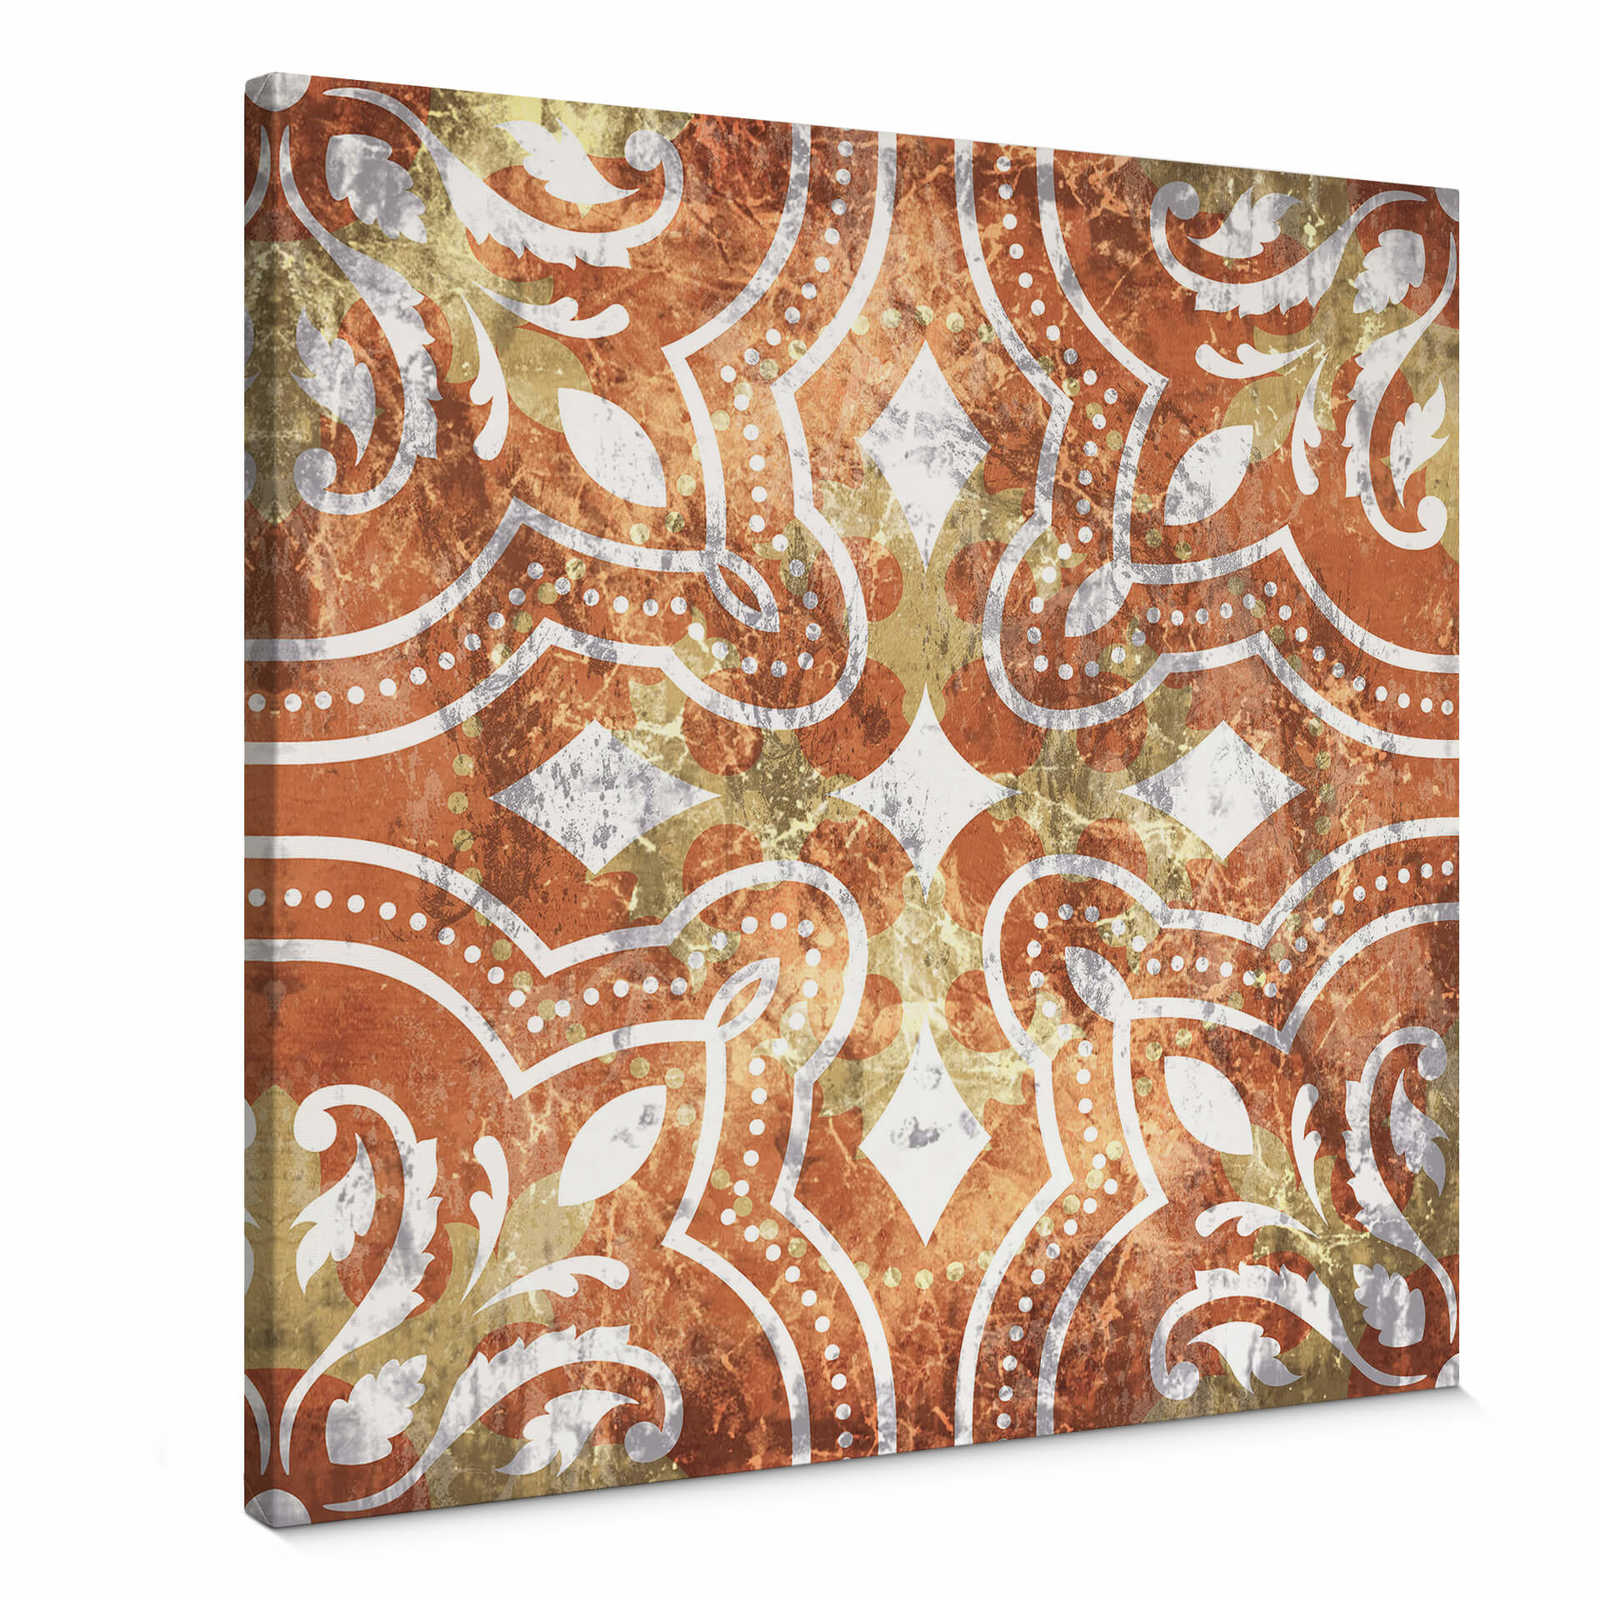         Canvas print terracotta tile pattern – brown, orange
    